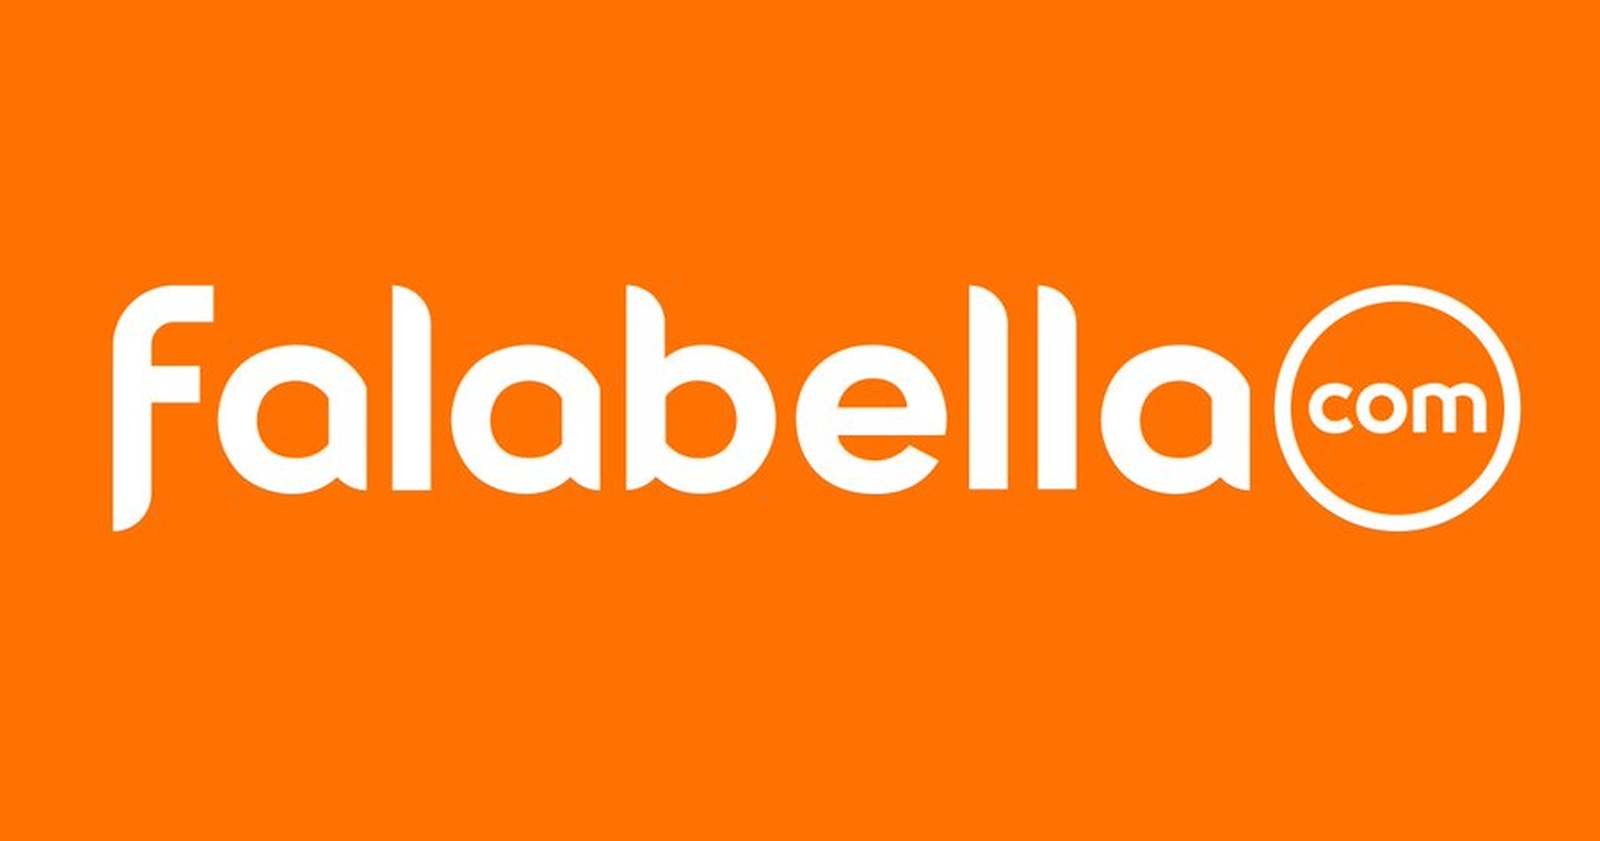 b2b产品超800万种！南美最大百货公司Falabella升级电商网站并推出新品牌形象